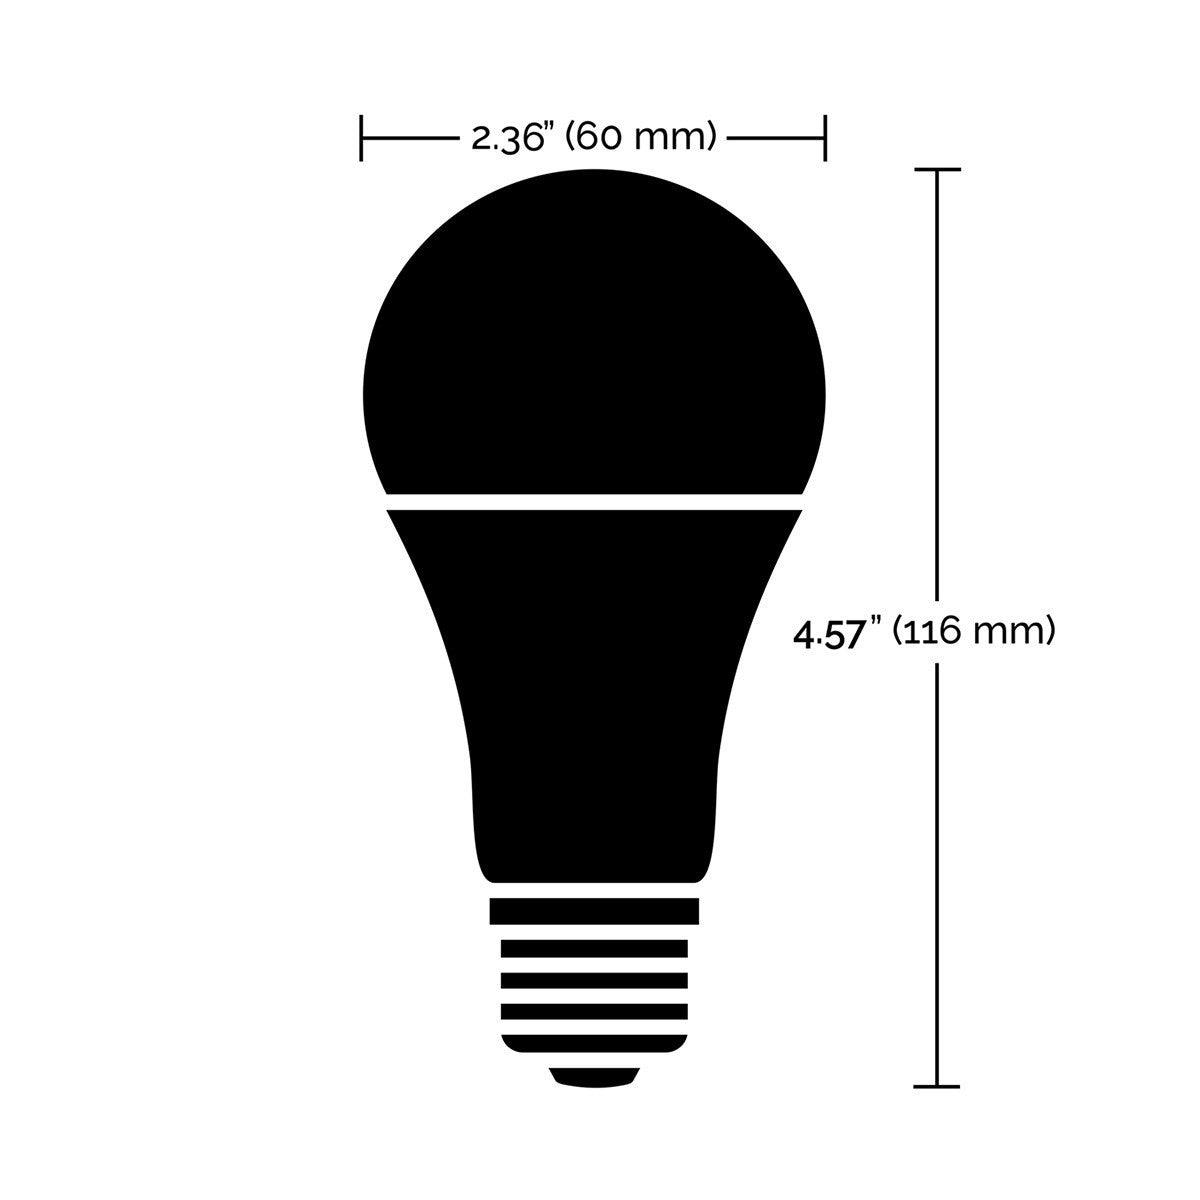 Starfish A19 Wi-Fi Smart LED Bulb, 9.5 Watts, 800 Lumens, 27K/30K/40K/50K, Tunable White - Bees Lighting